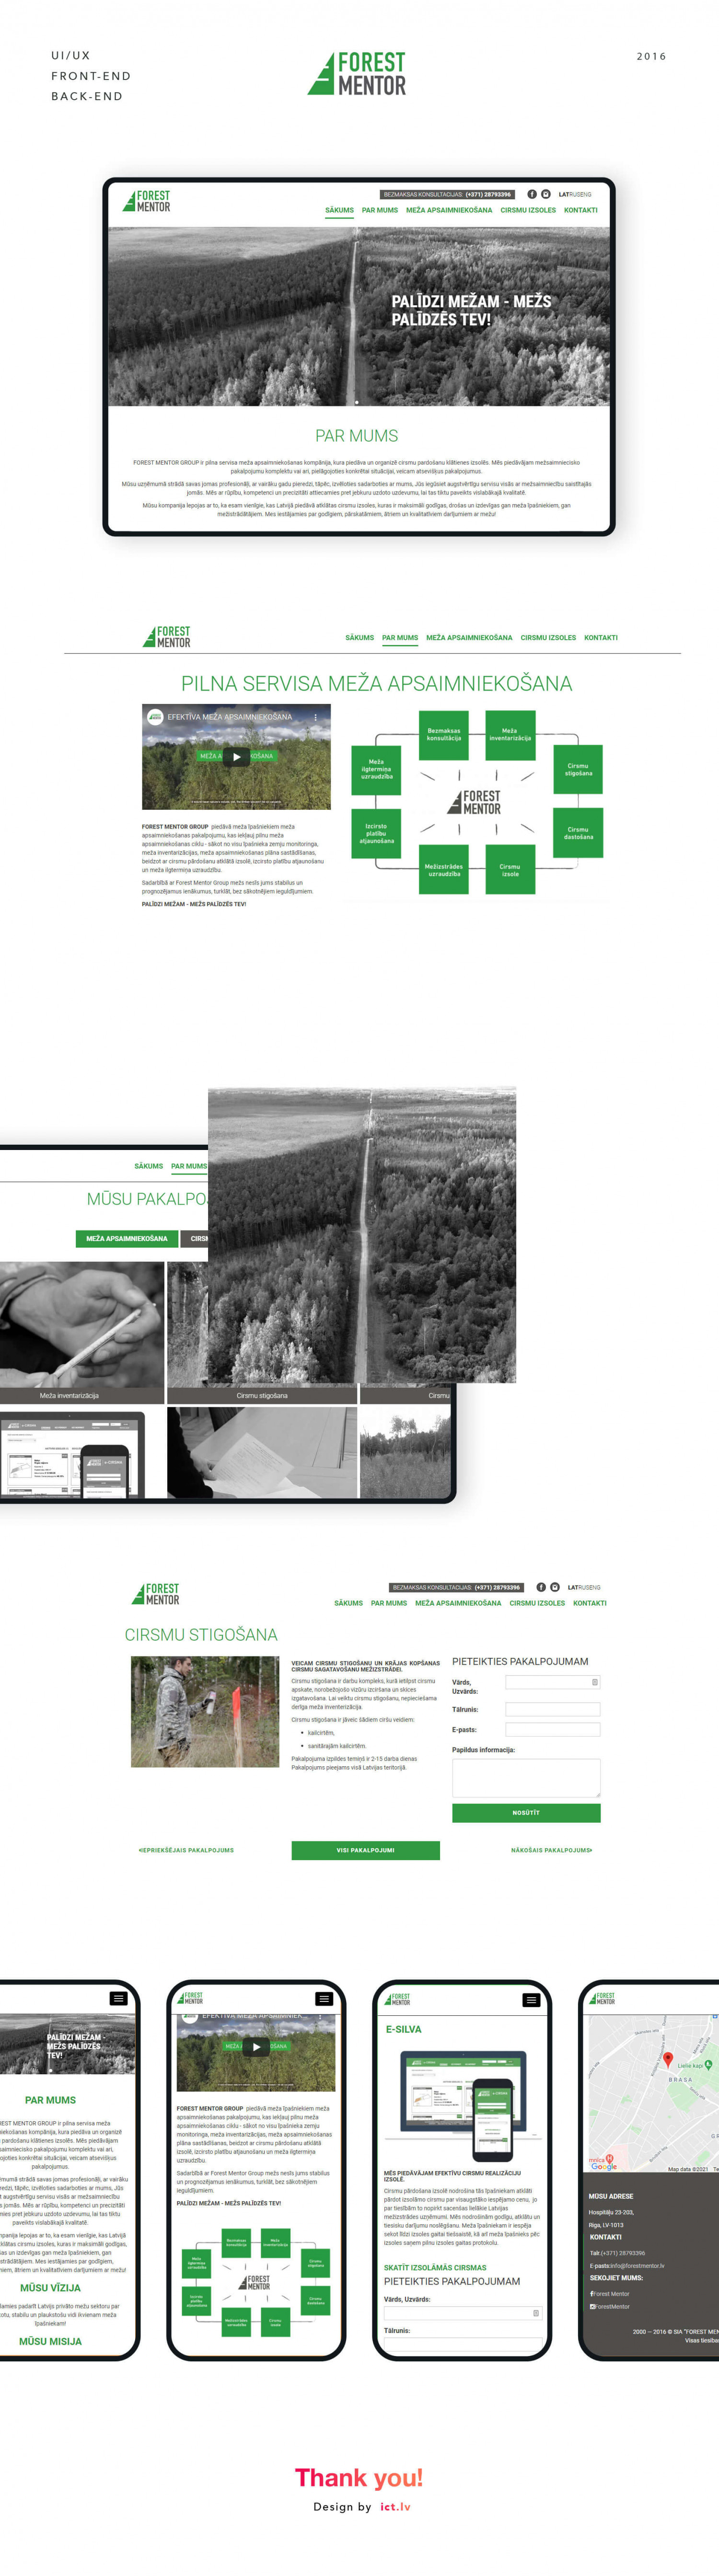 Разработка веб-сайта Forest Mentor